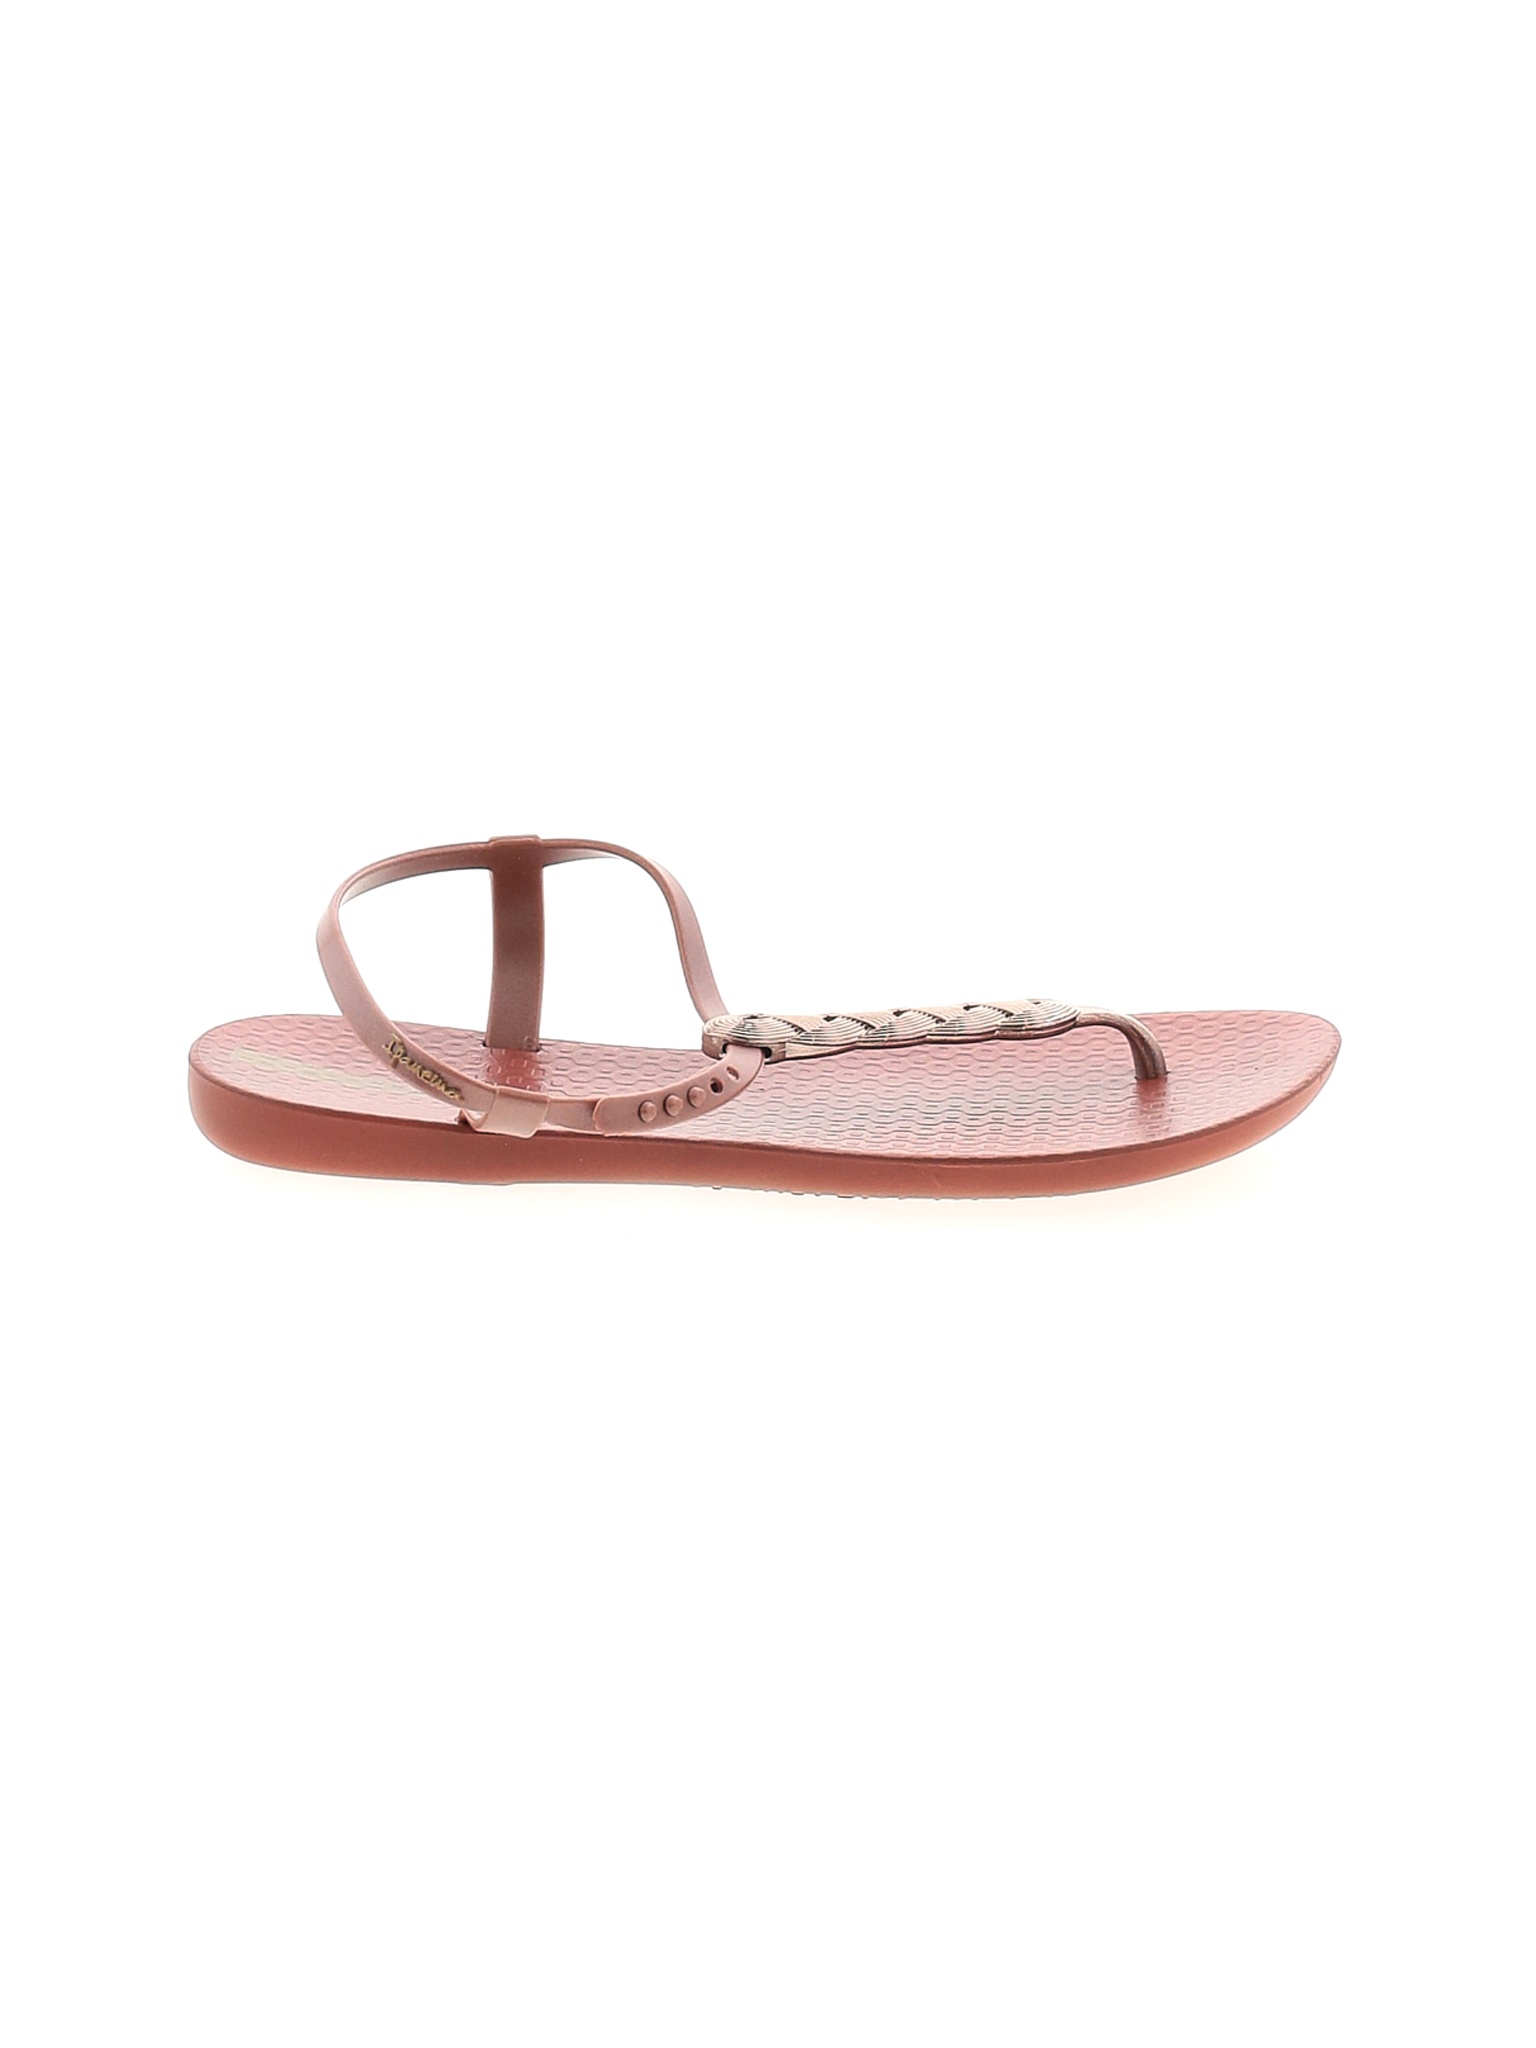 Grendene Women Pink Sandals US 9 | eBay